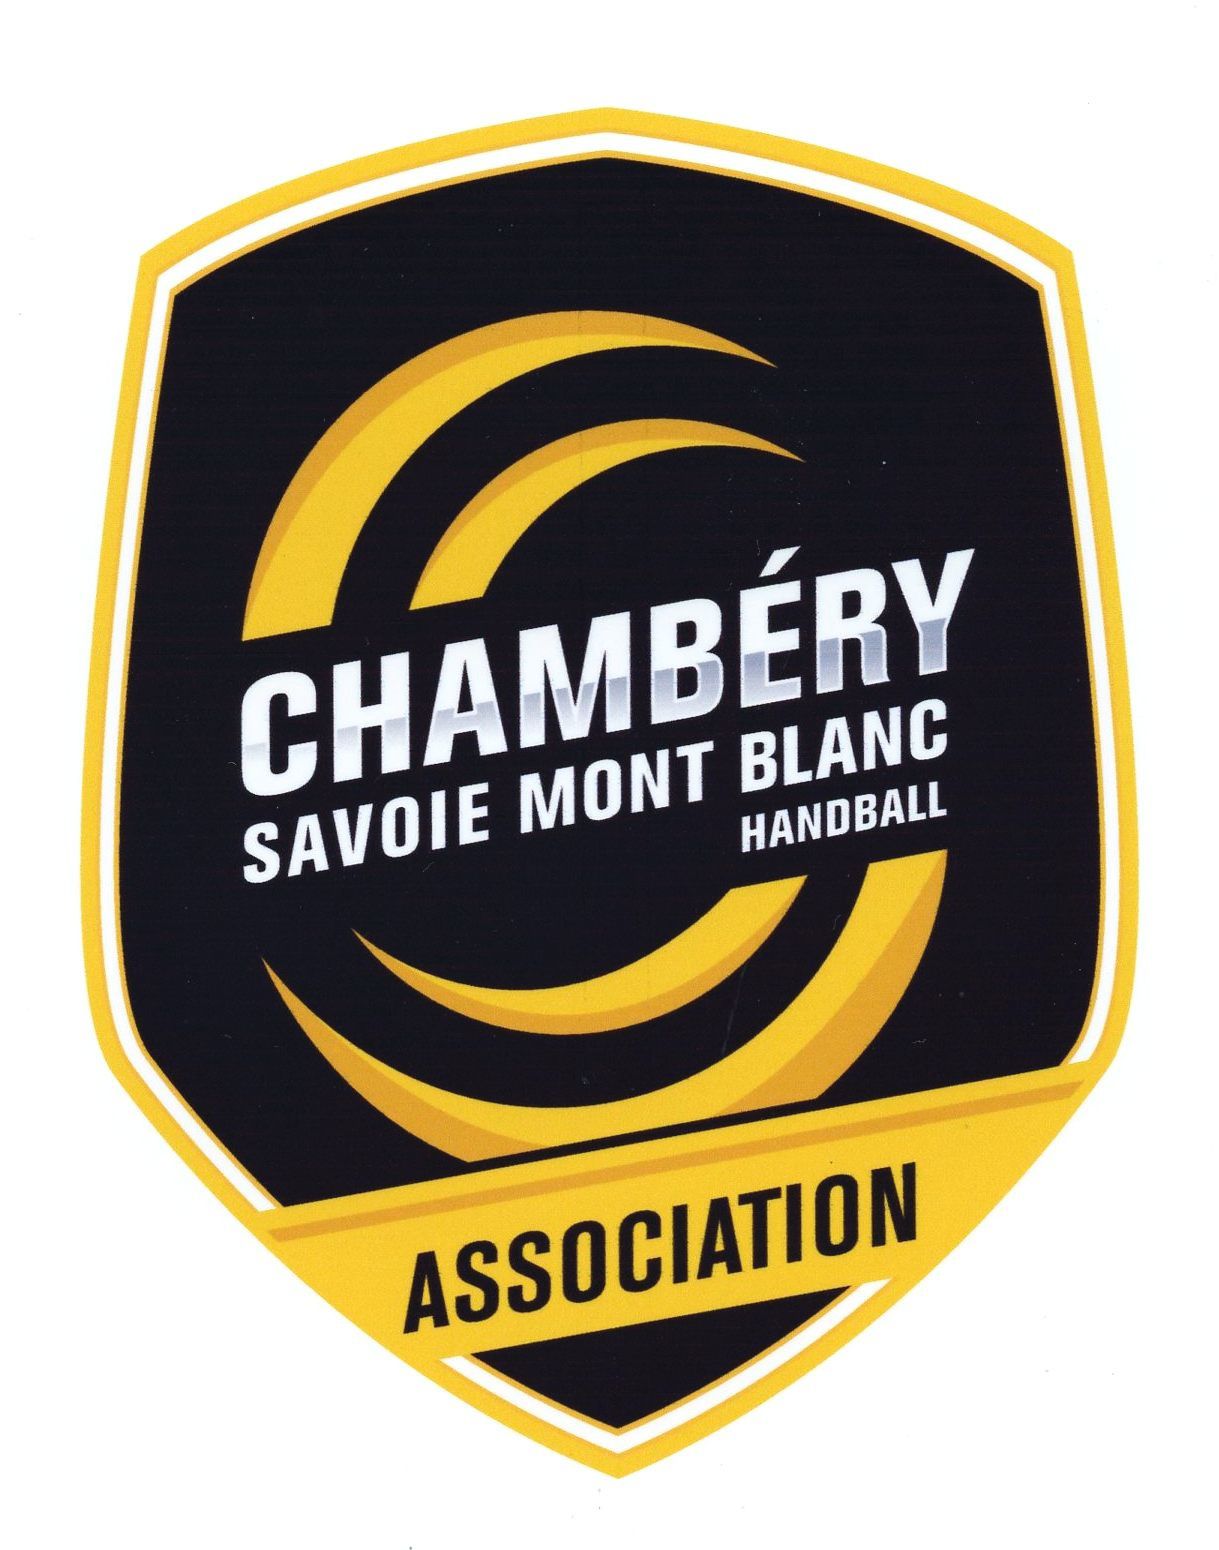 Présentation des -18 France du CHAMBERY SAVOIE MONT-BLANC HANDBALL 2016 - 2017